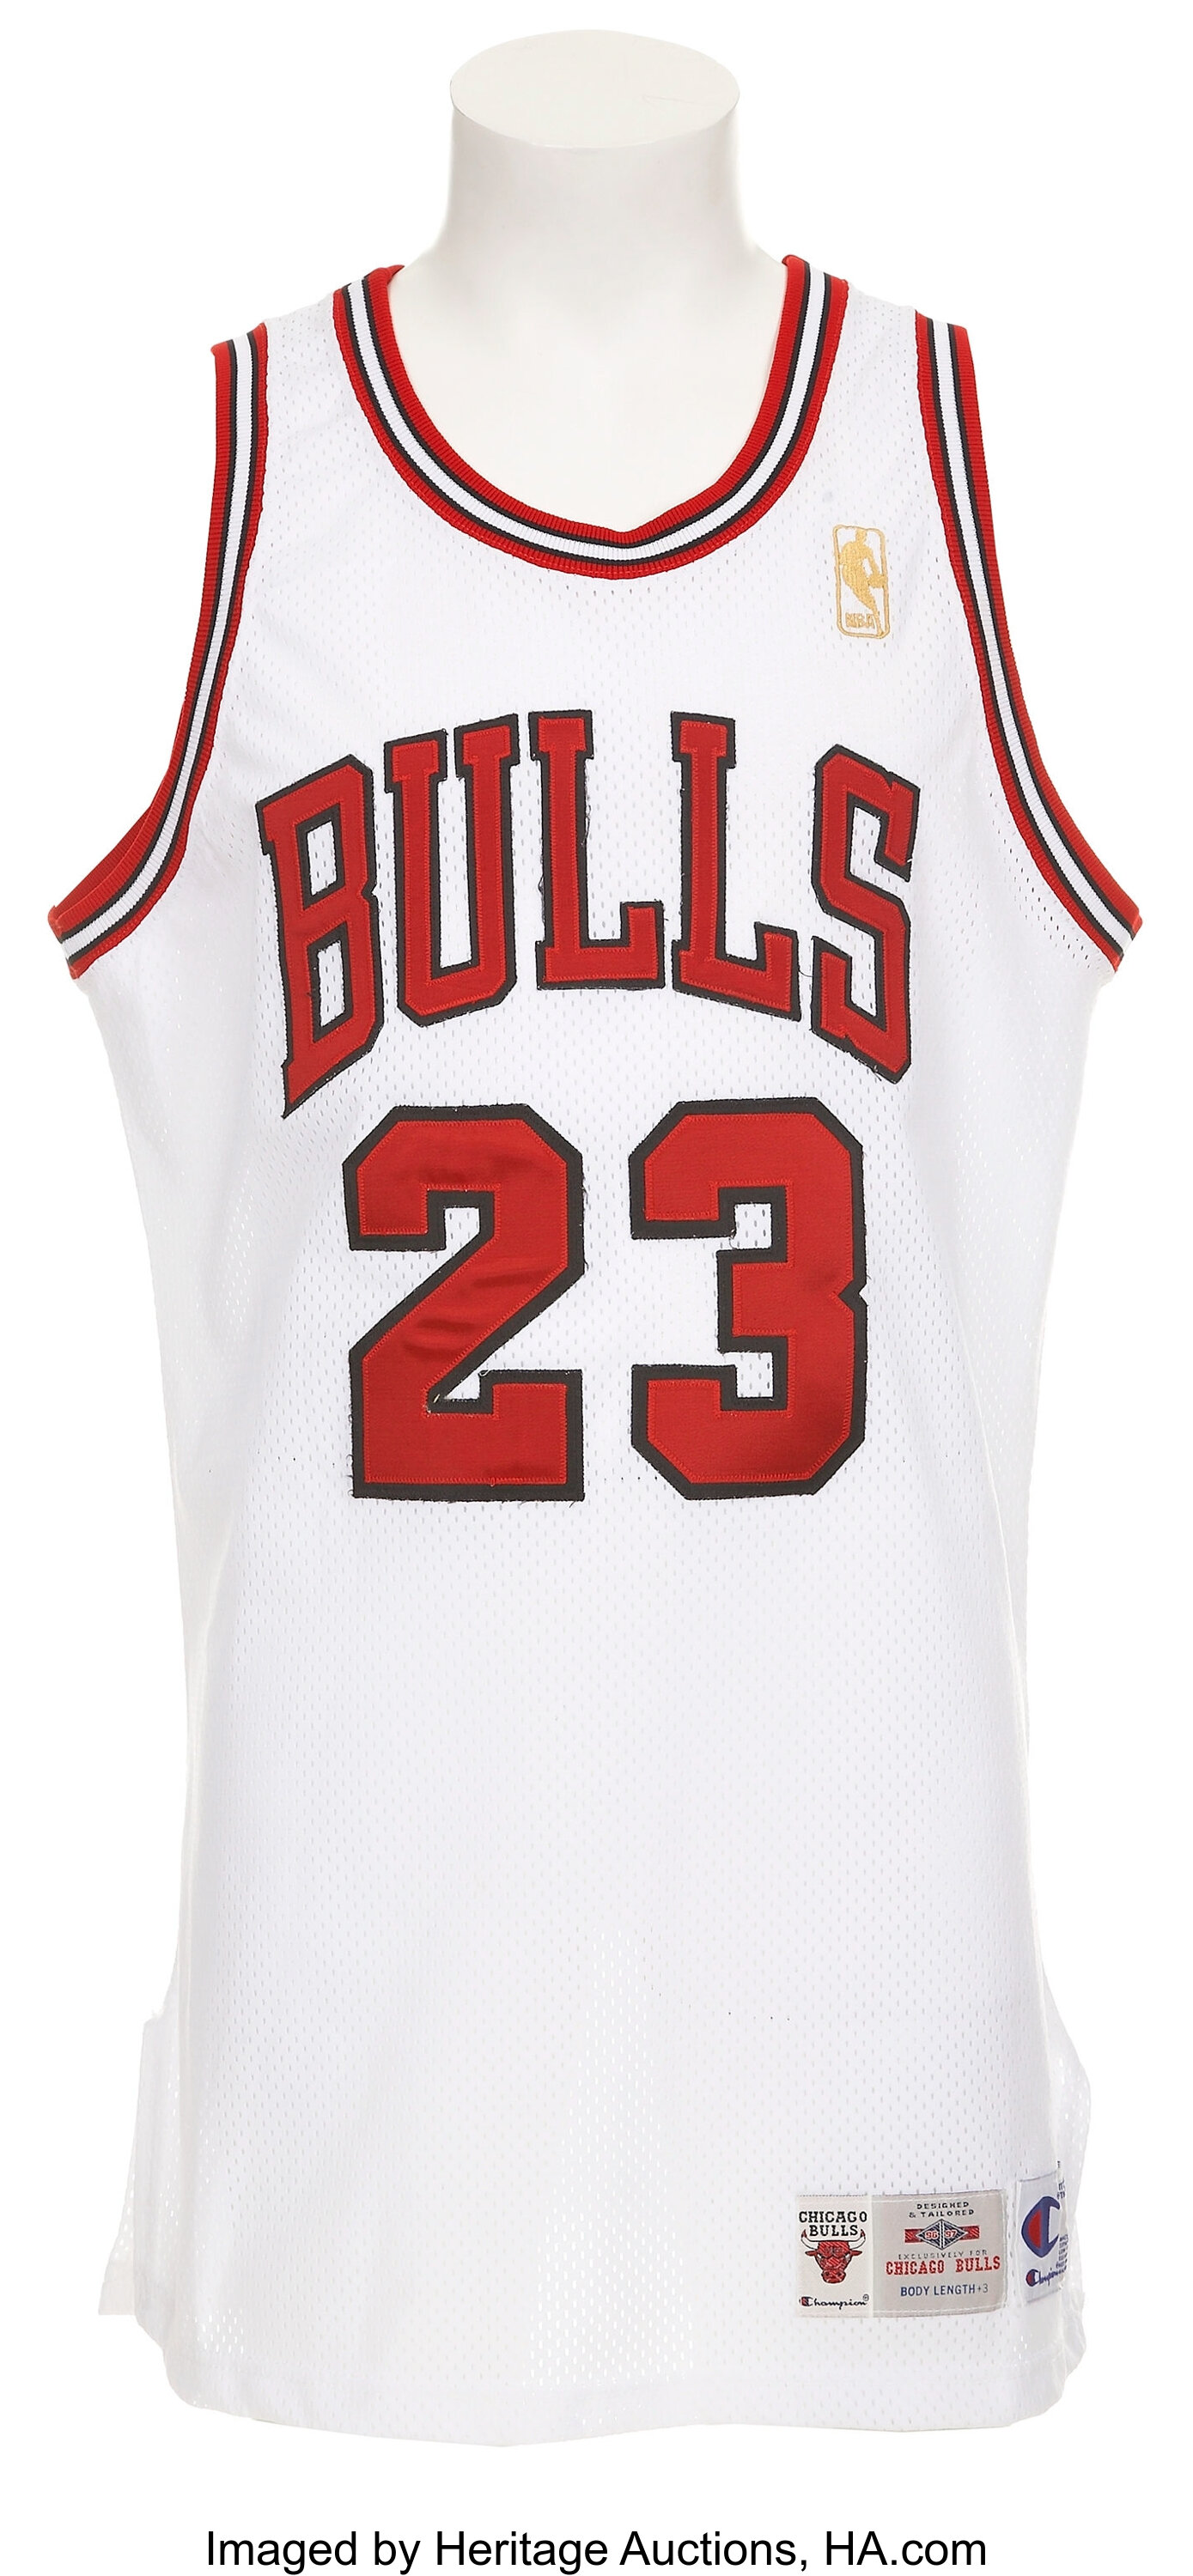 NBA UK - Michael Jordan 96-97 Authentic Jersey available